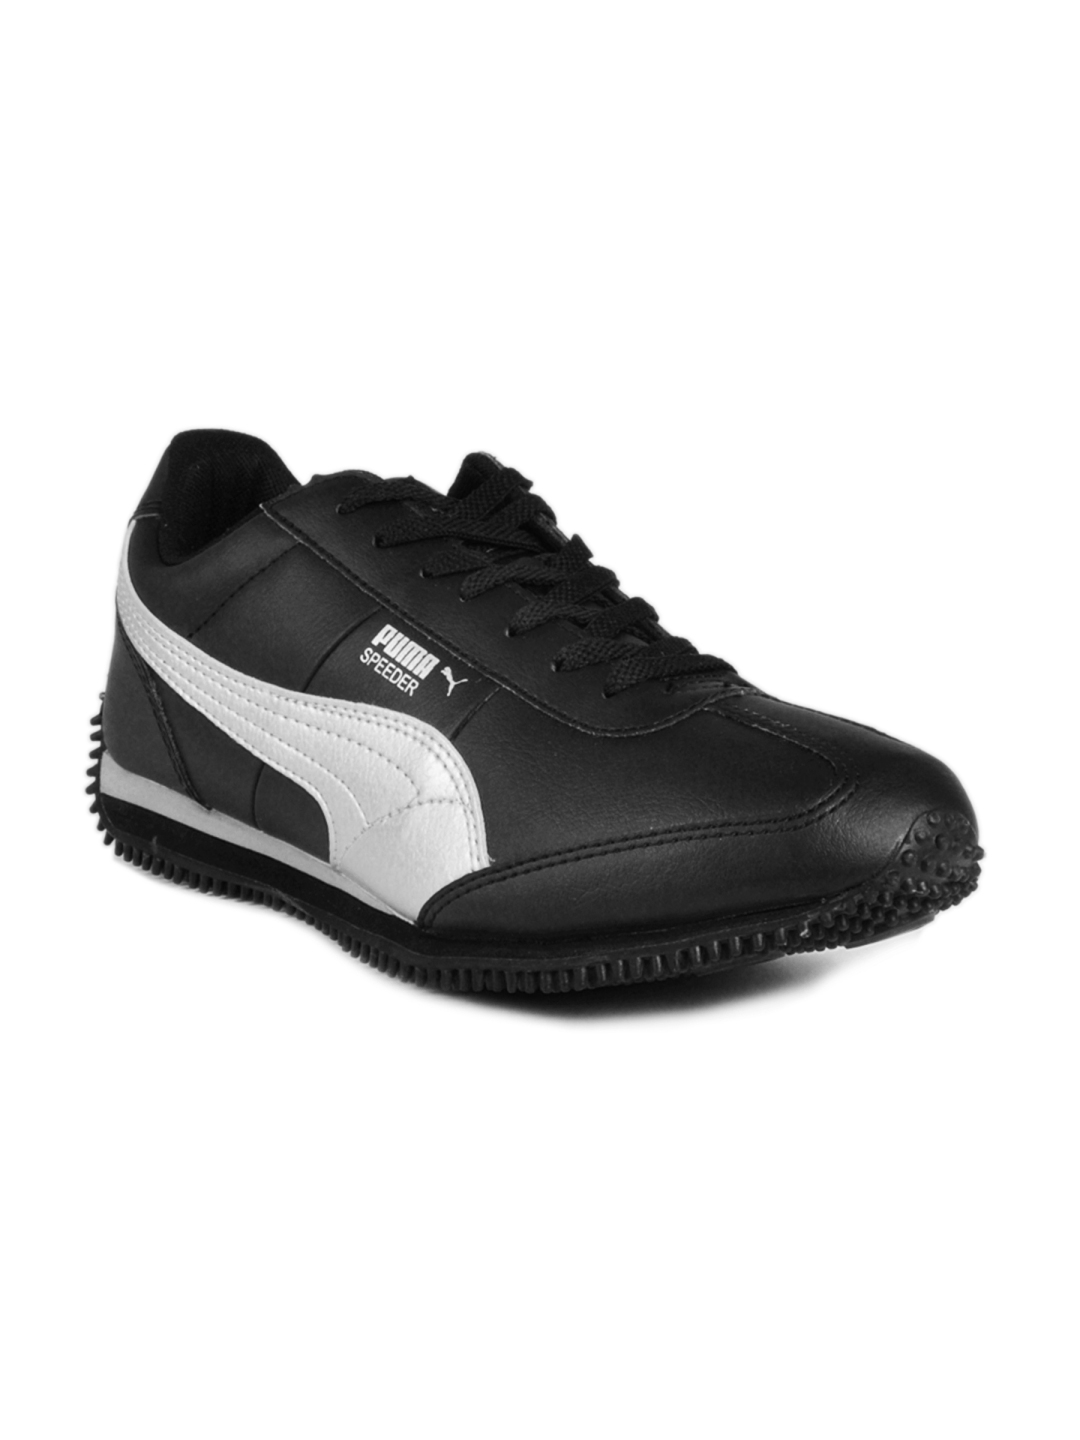 Buy Puma Men Speeder Black Casual Shoes - Casual Shoes for Men 9213 ...